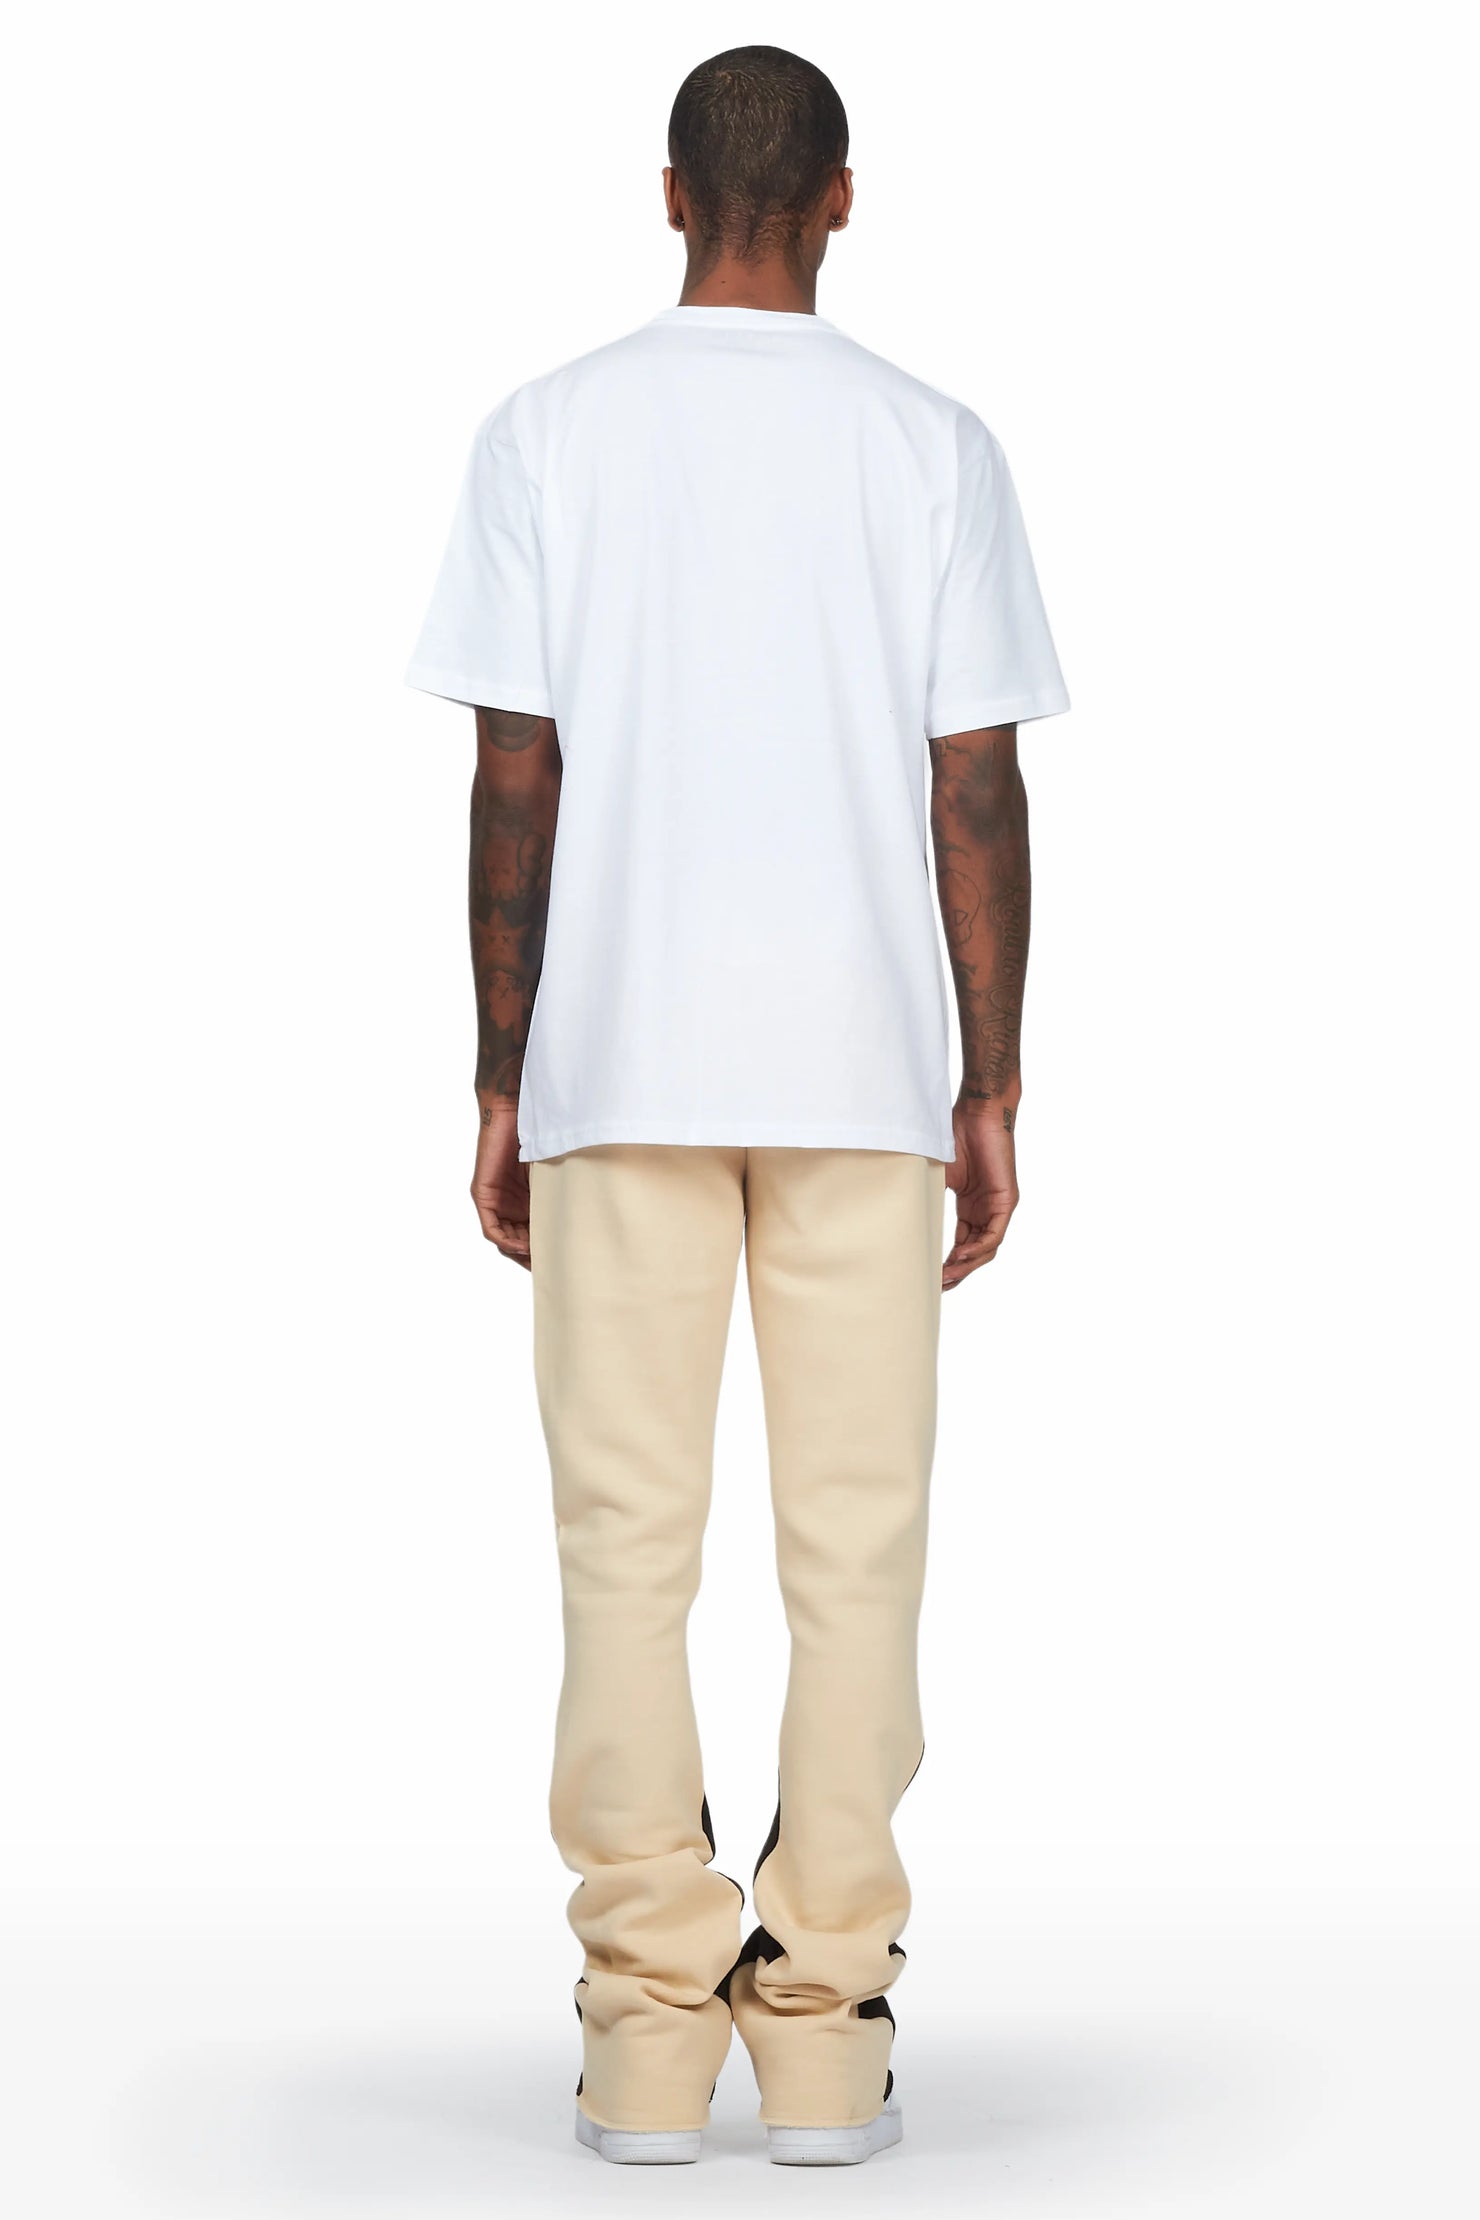 Draven White/Beige T-Shirt Stacked Flare Trackset